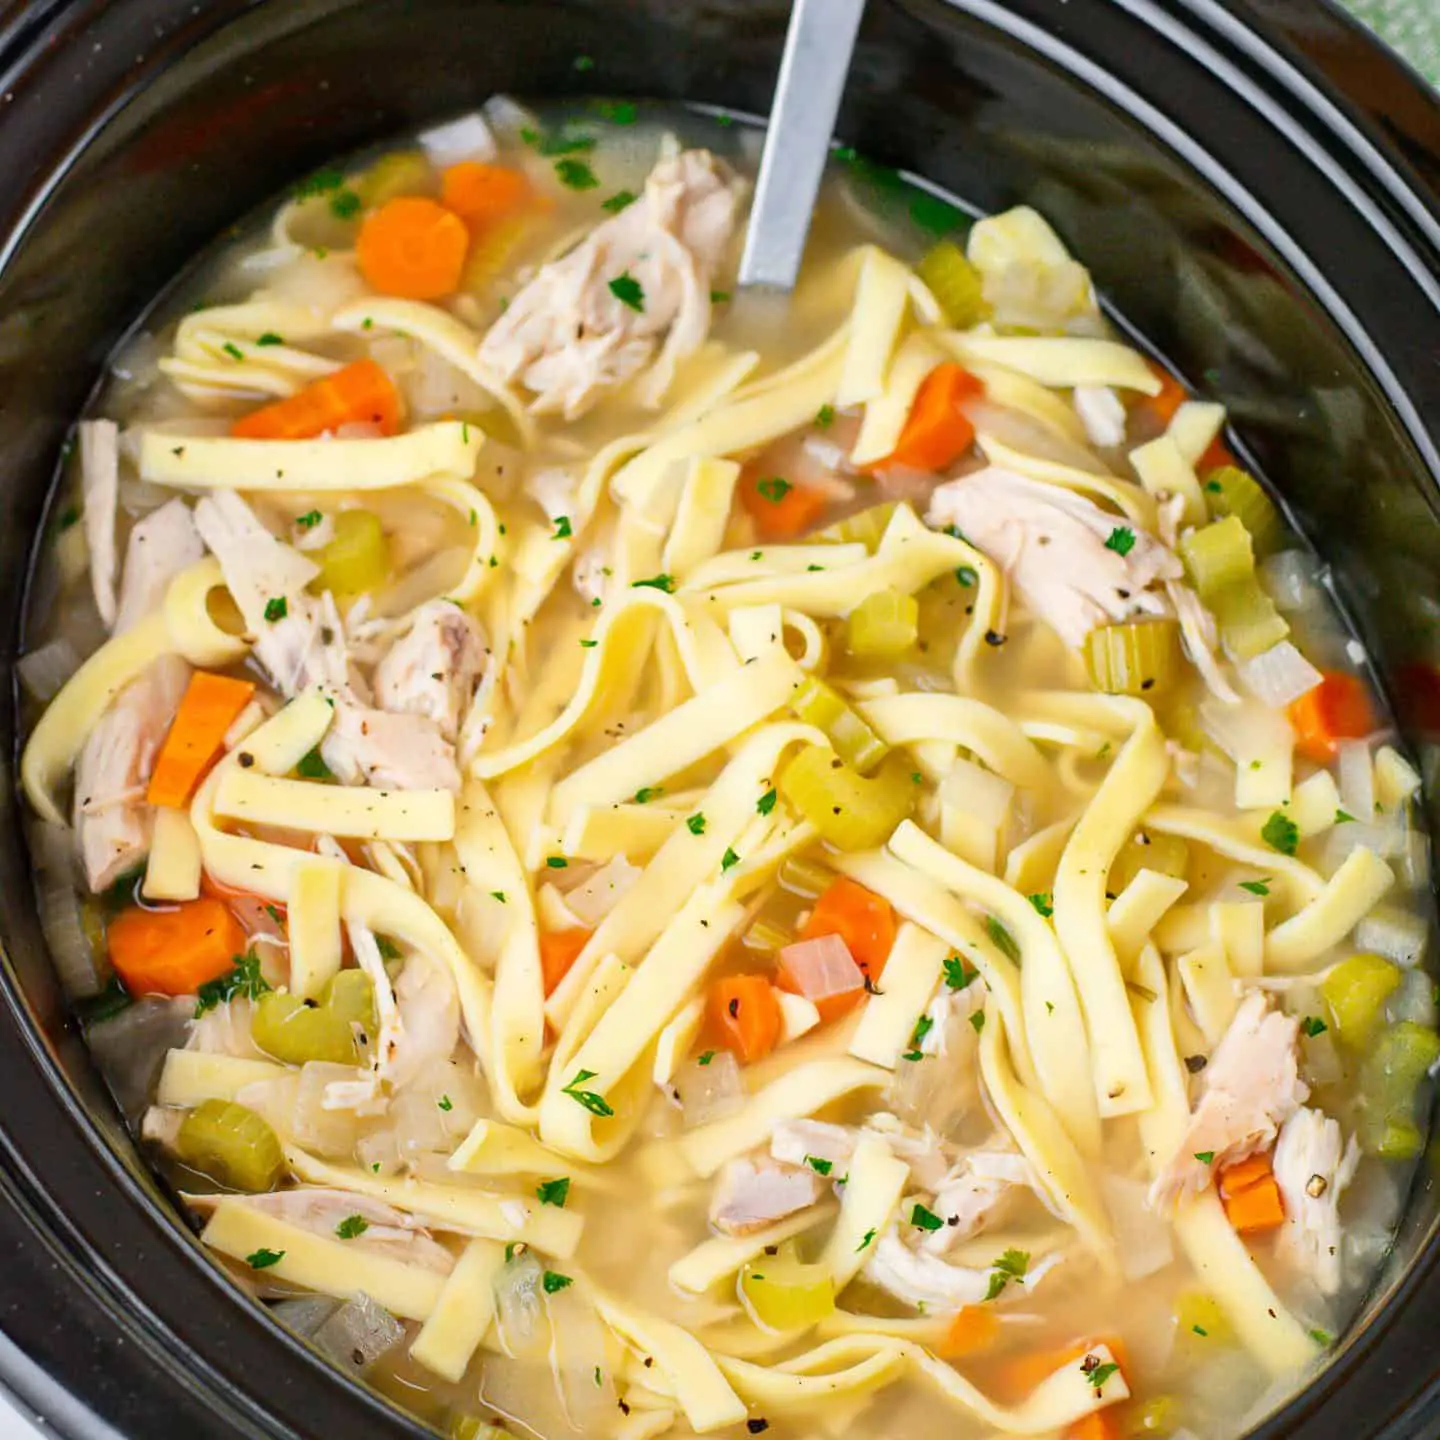 Easy Crockpot Chicken Noodle Soup | Grandma's Classic Recipe!